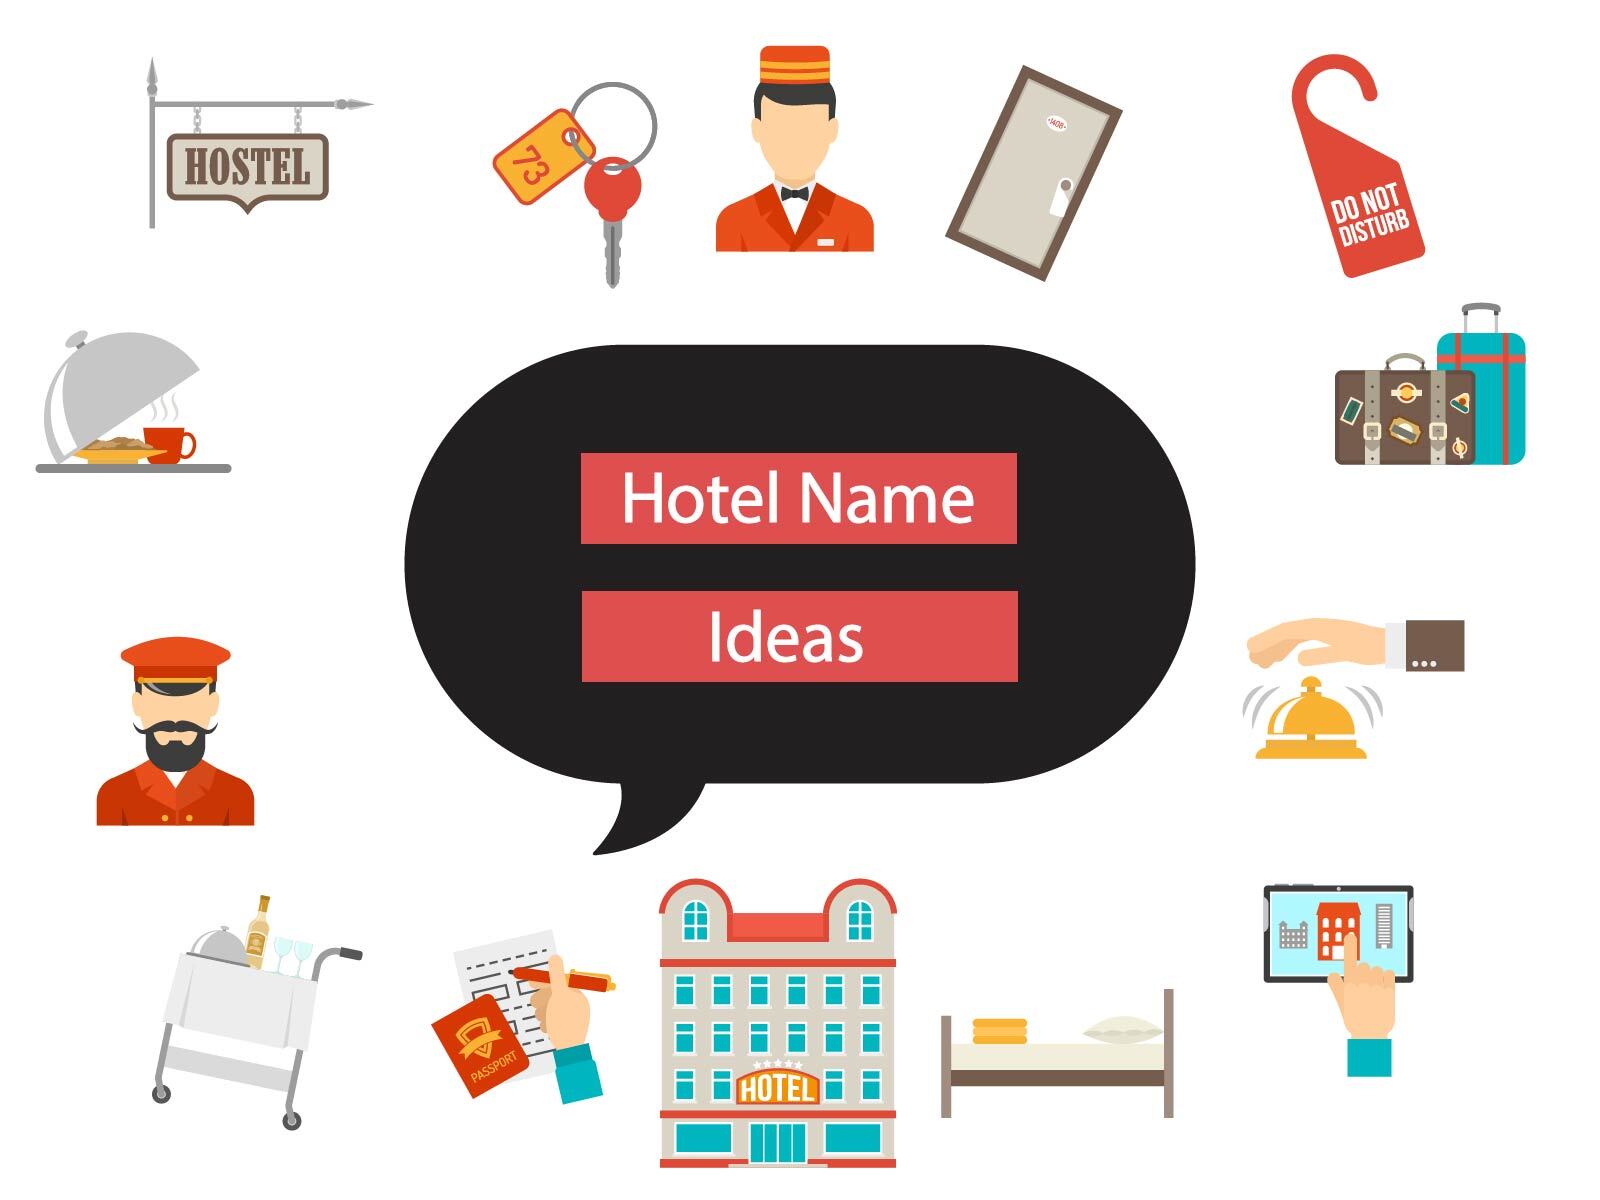 Hotel Name Ideas